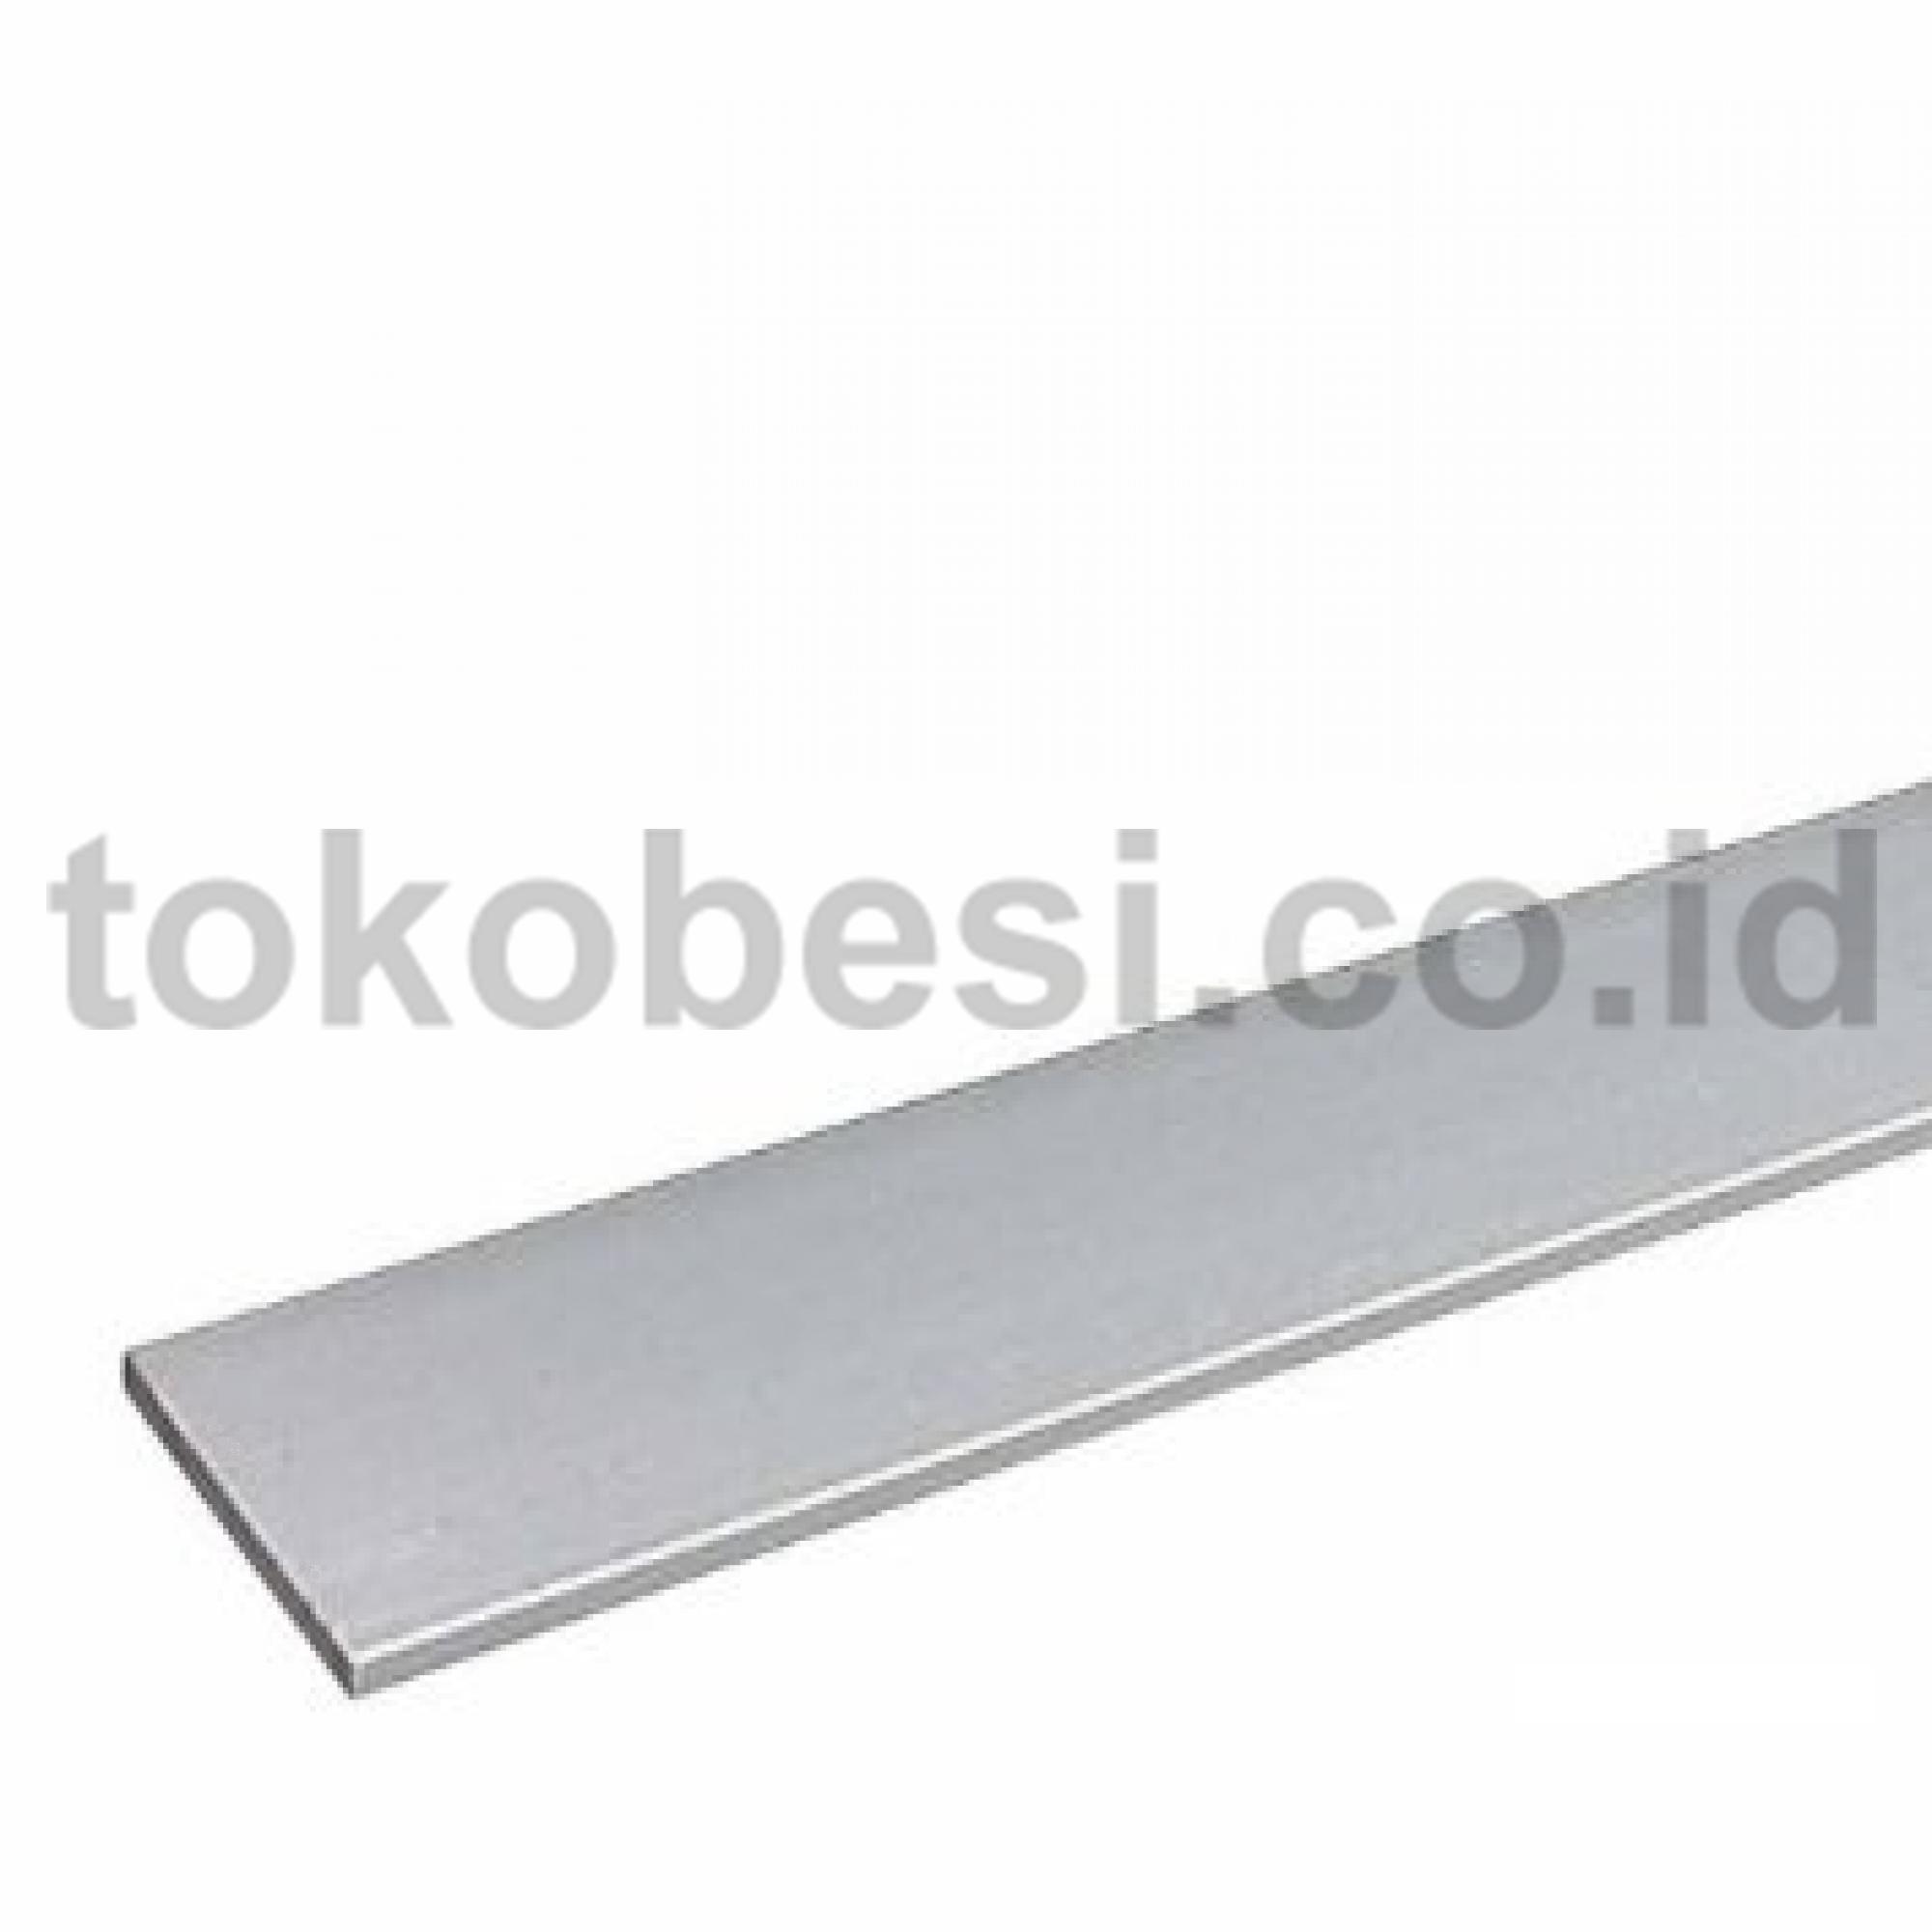 Strip Stainless Steel 201 ≠ 8 x 40 x 6000 mm